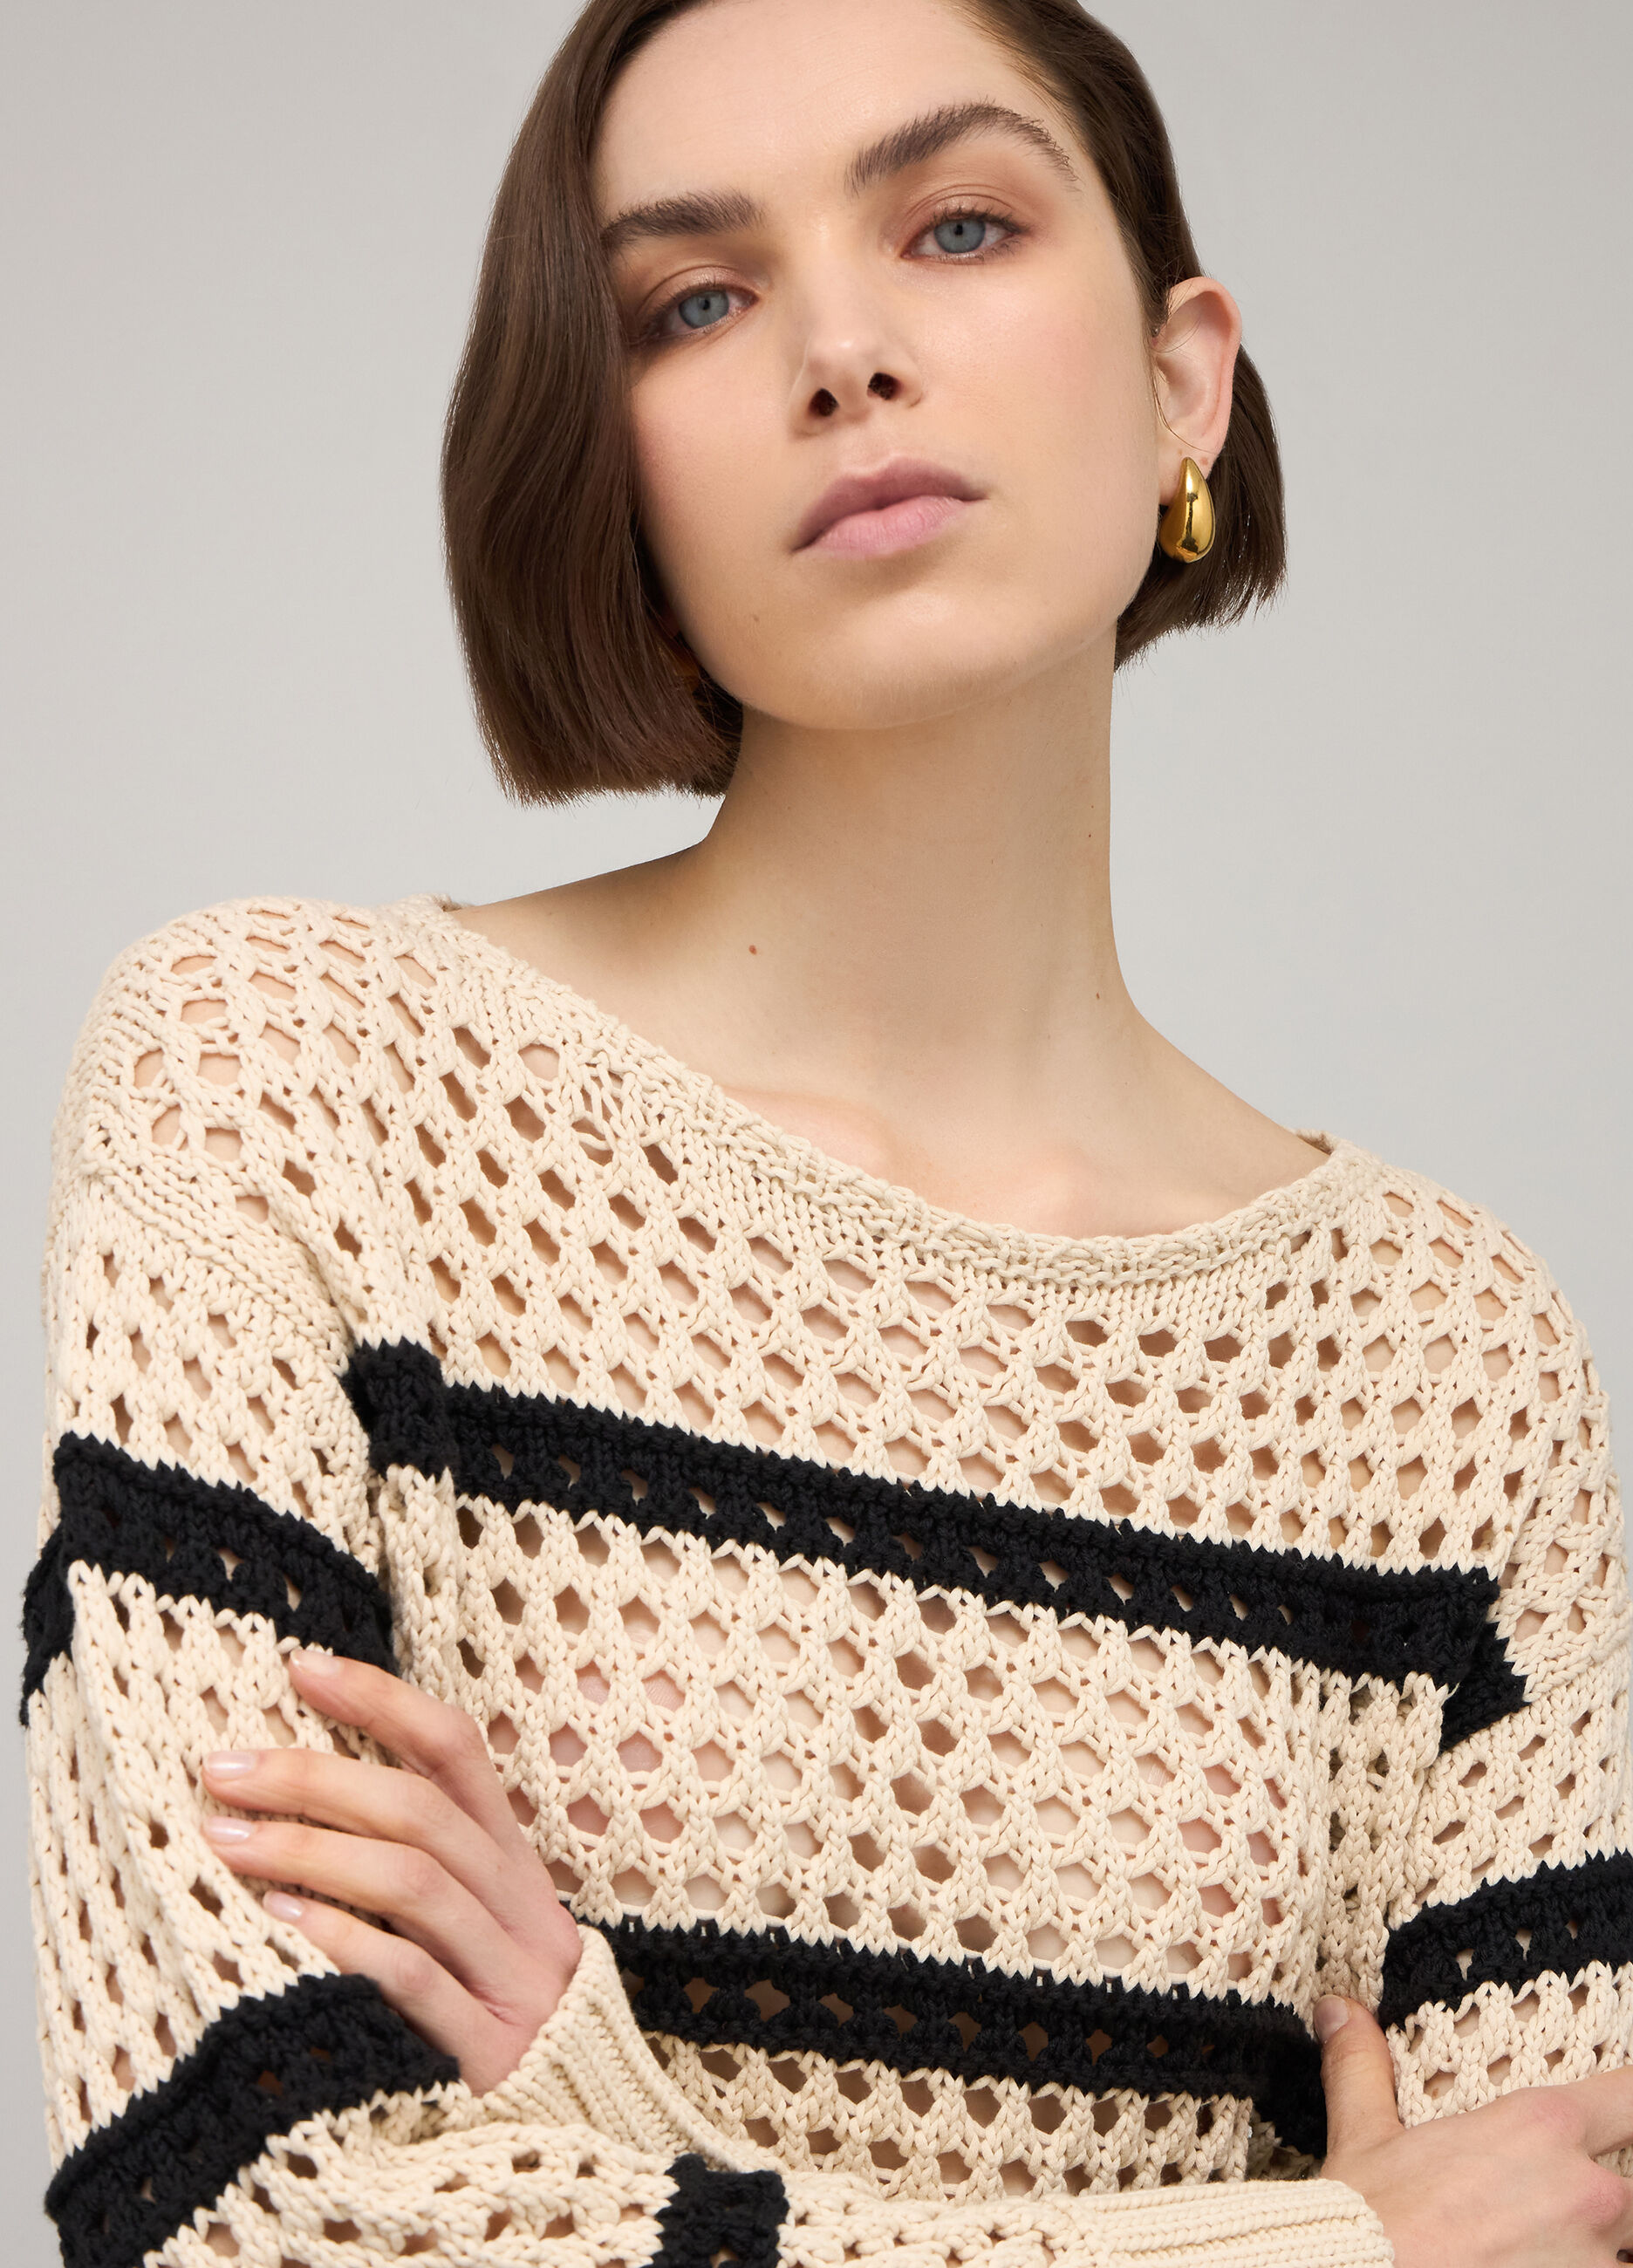 Striped cotton-blend tricot jumper